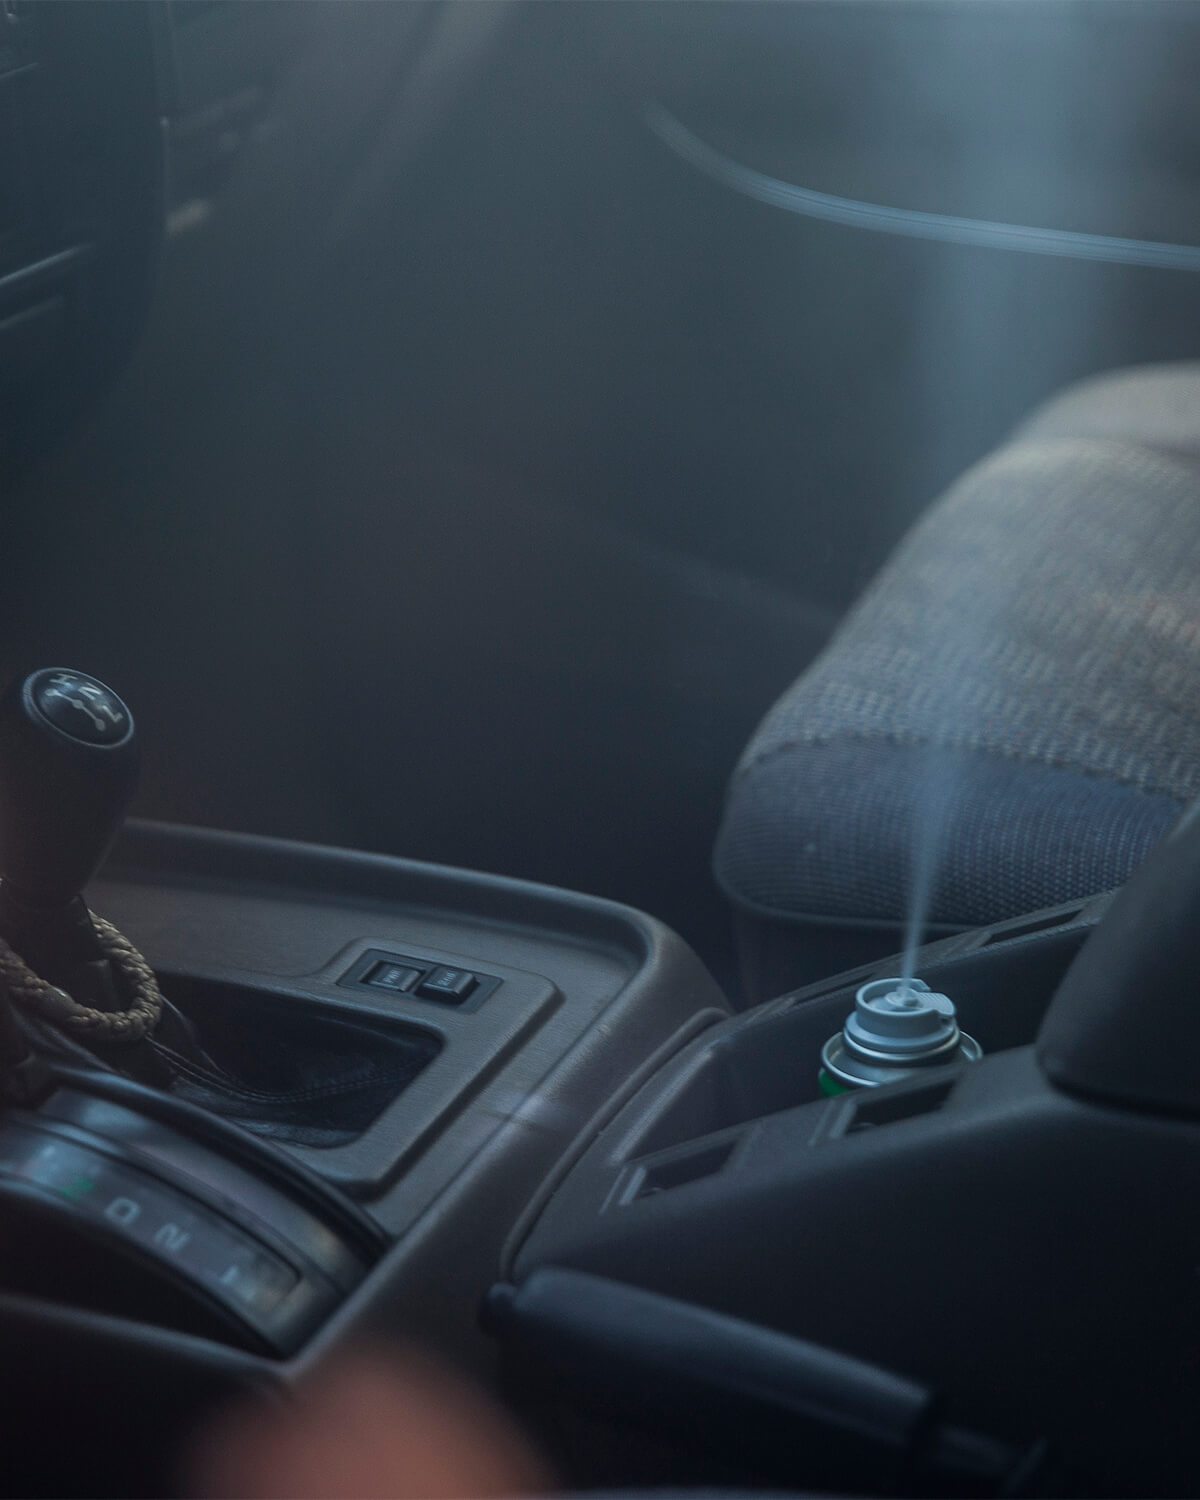 Odor remover for your car interior